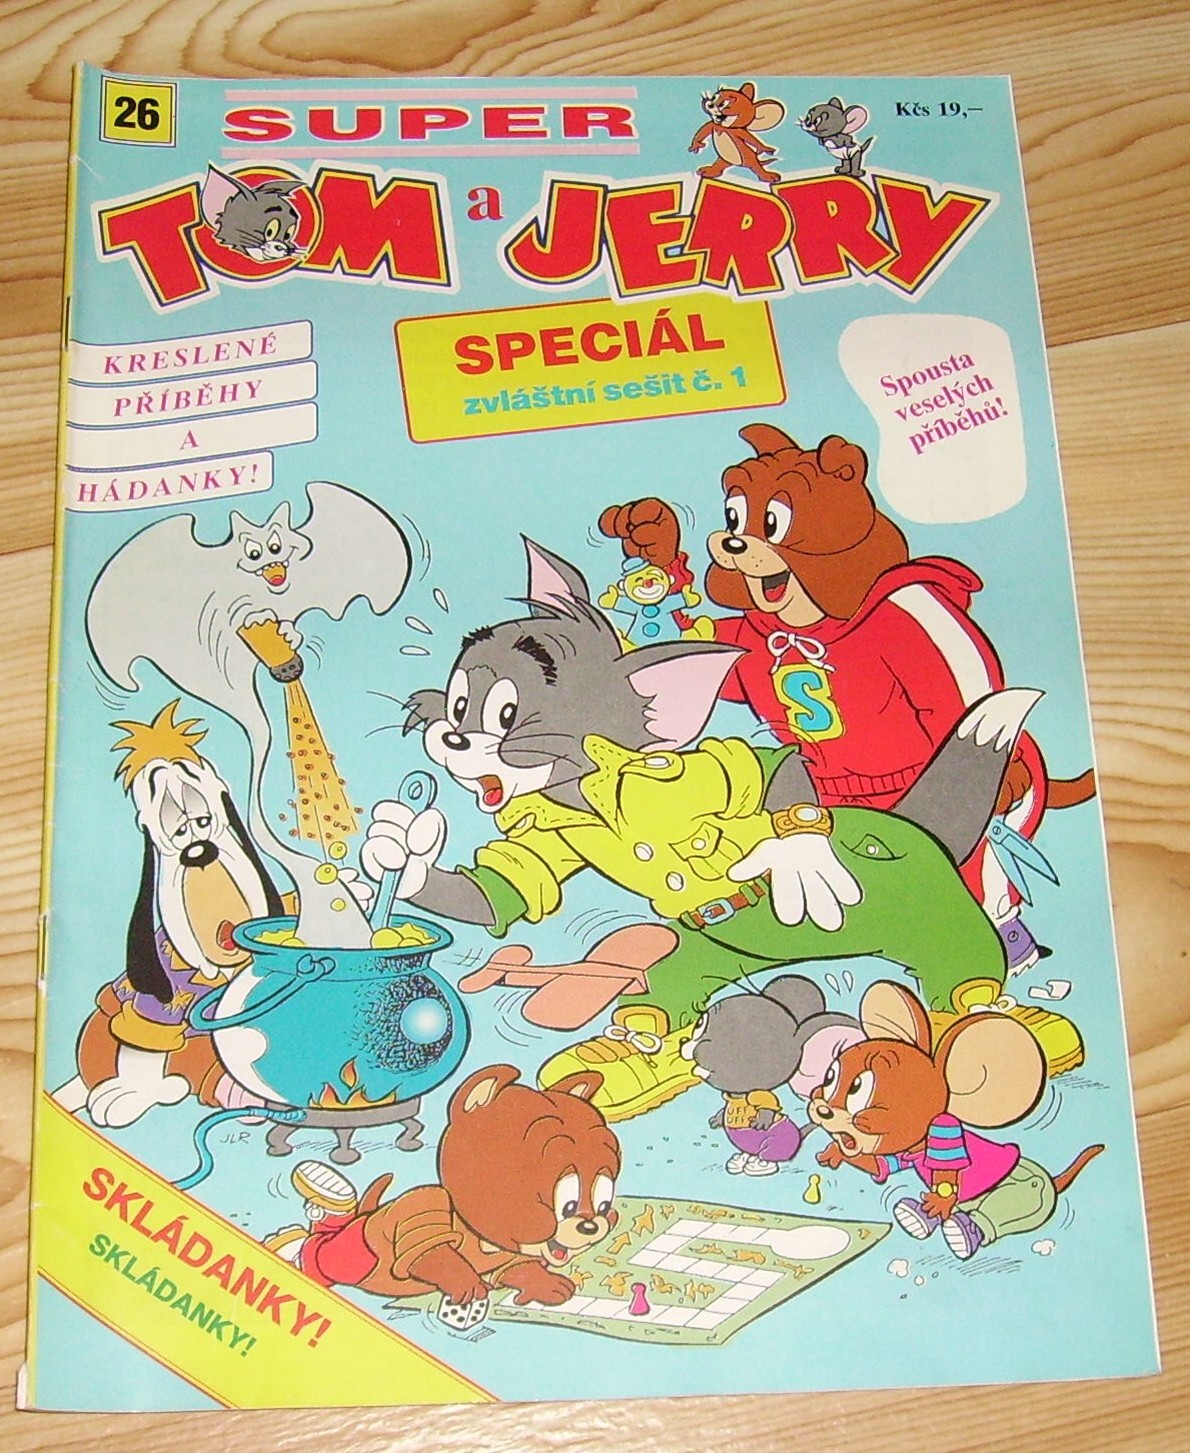 Super Tom a Jerry #26